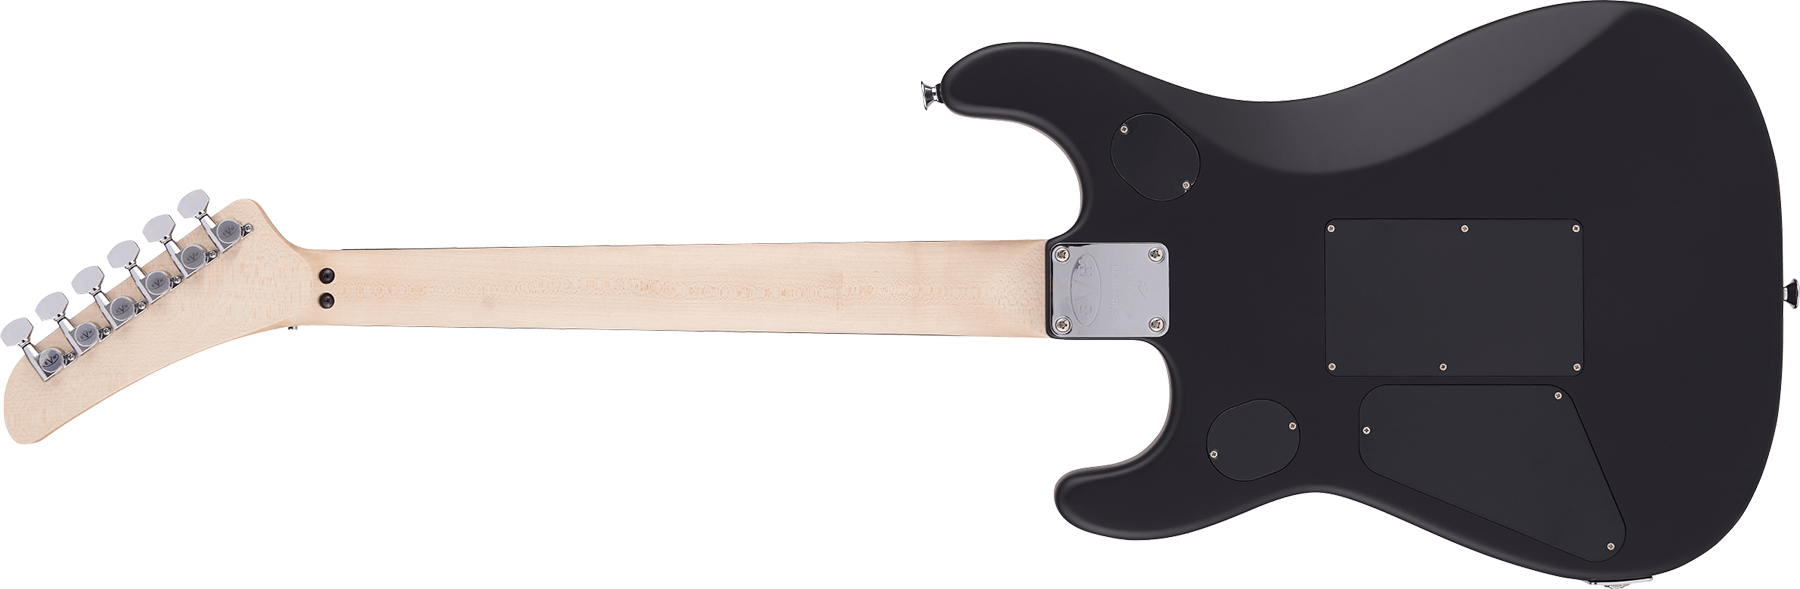 Evh 5150 Deluxe Poplar Burl Mex 2h Fr Eb - Black Burst - Str shape electric guitar - Variation 1